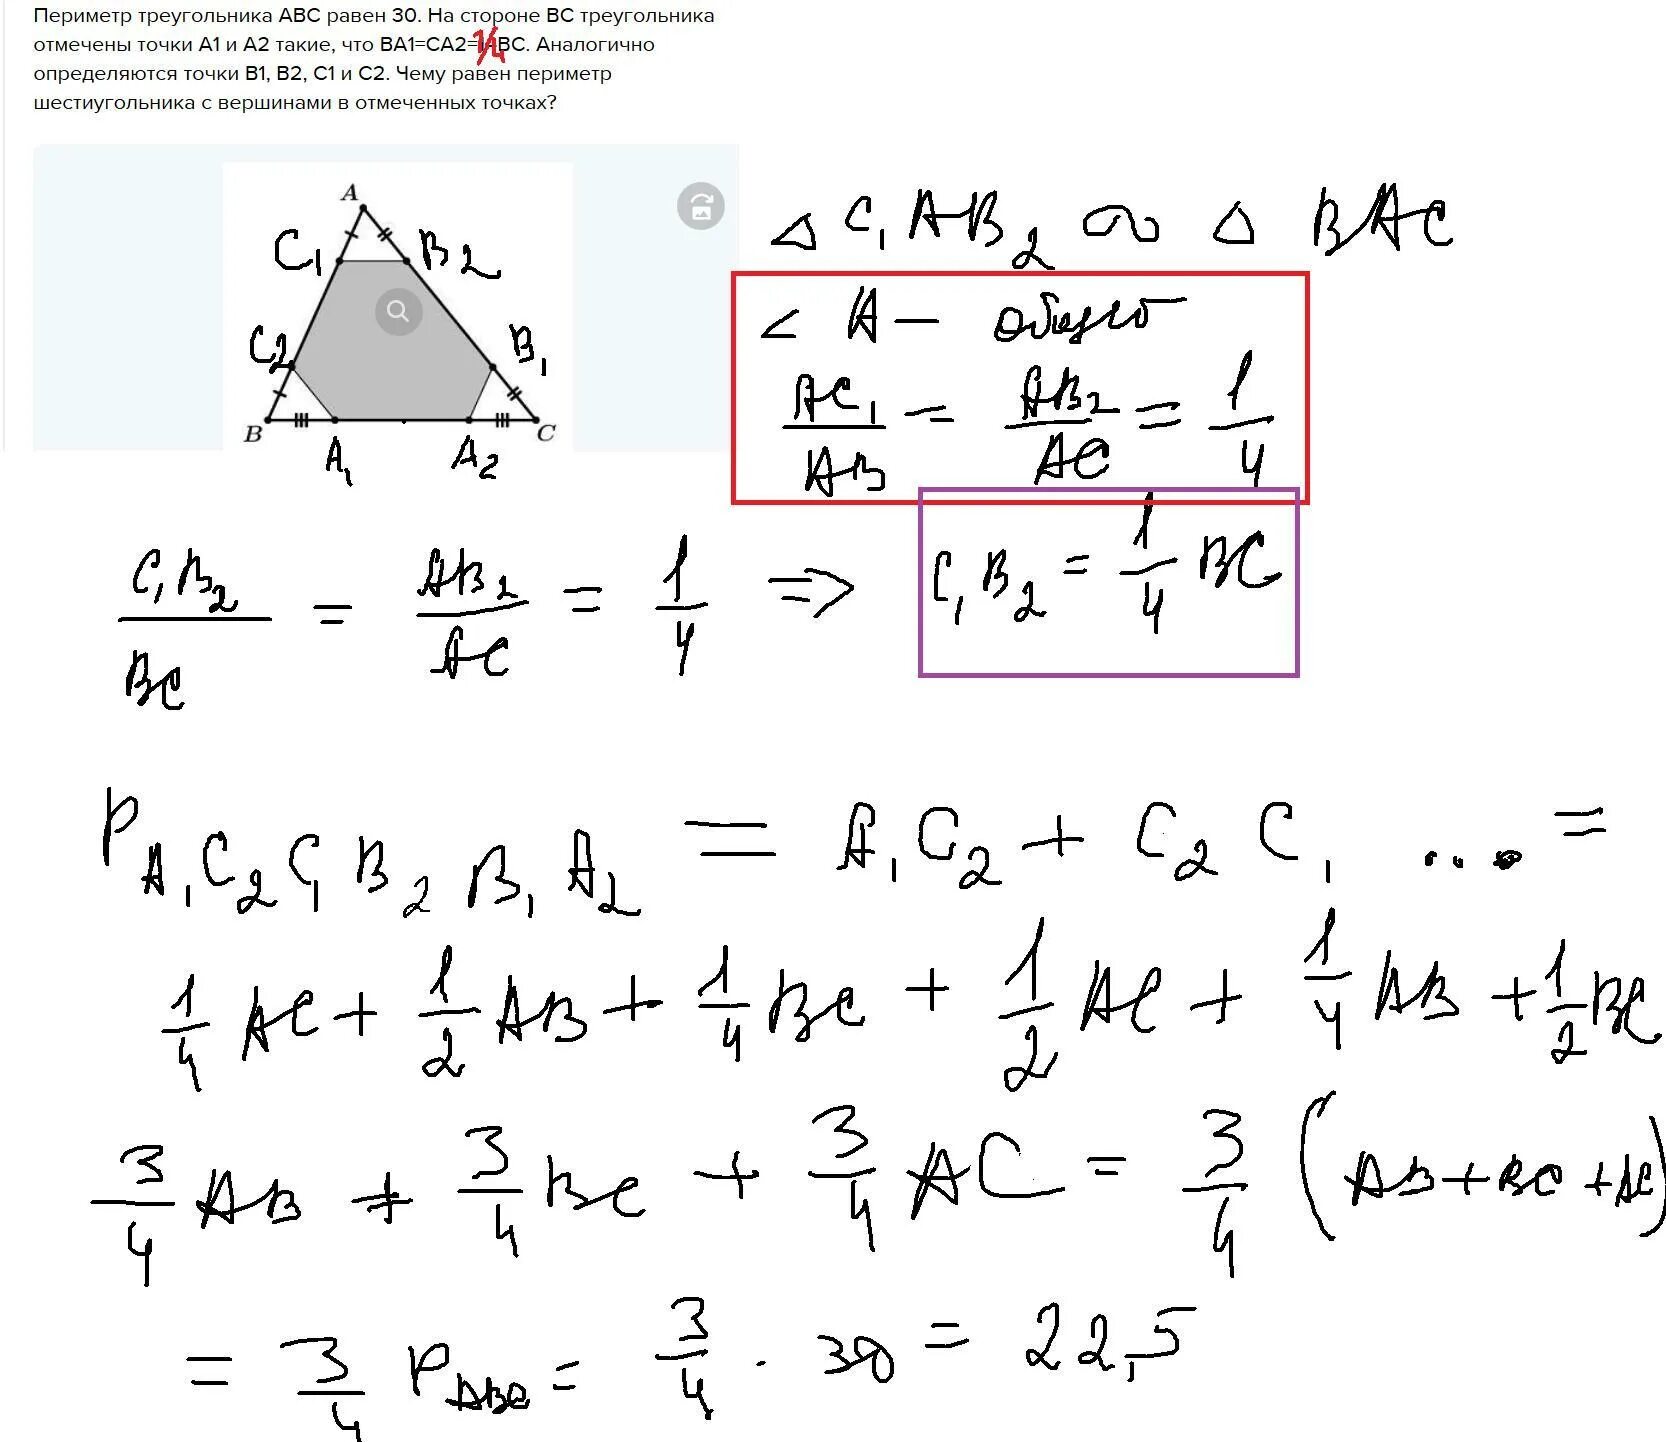 Дано а равно 30. Периметр треугольника ABC равен. Площадь треугольника равна a*b*c. Периметр треугольника АБС. На стороне BC треугольника ABC.